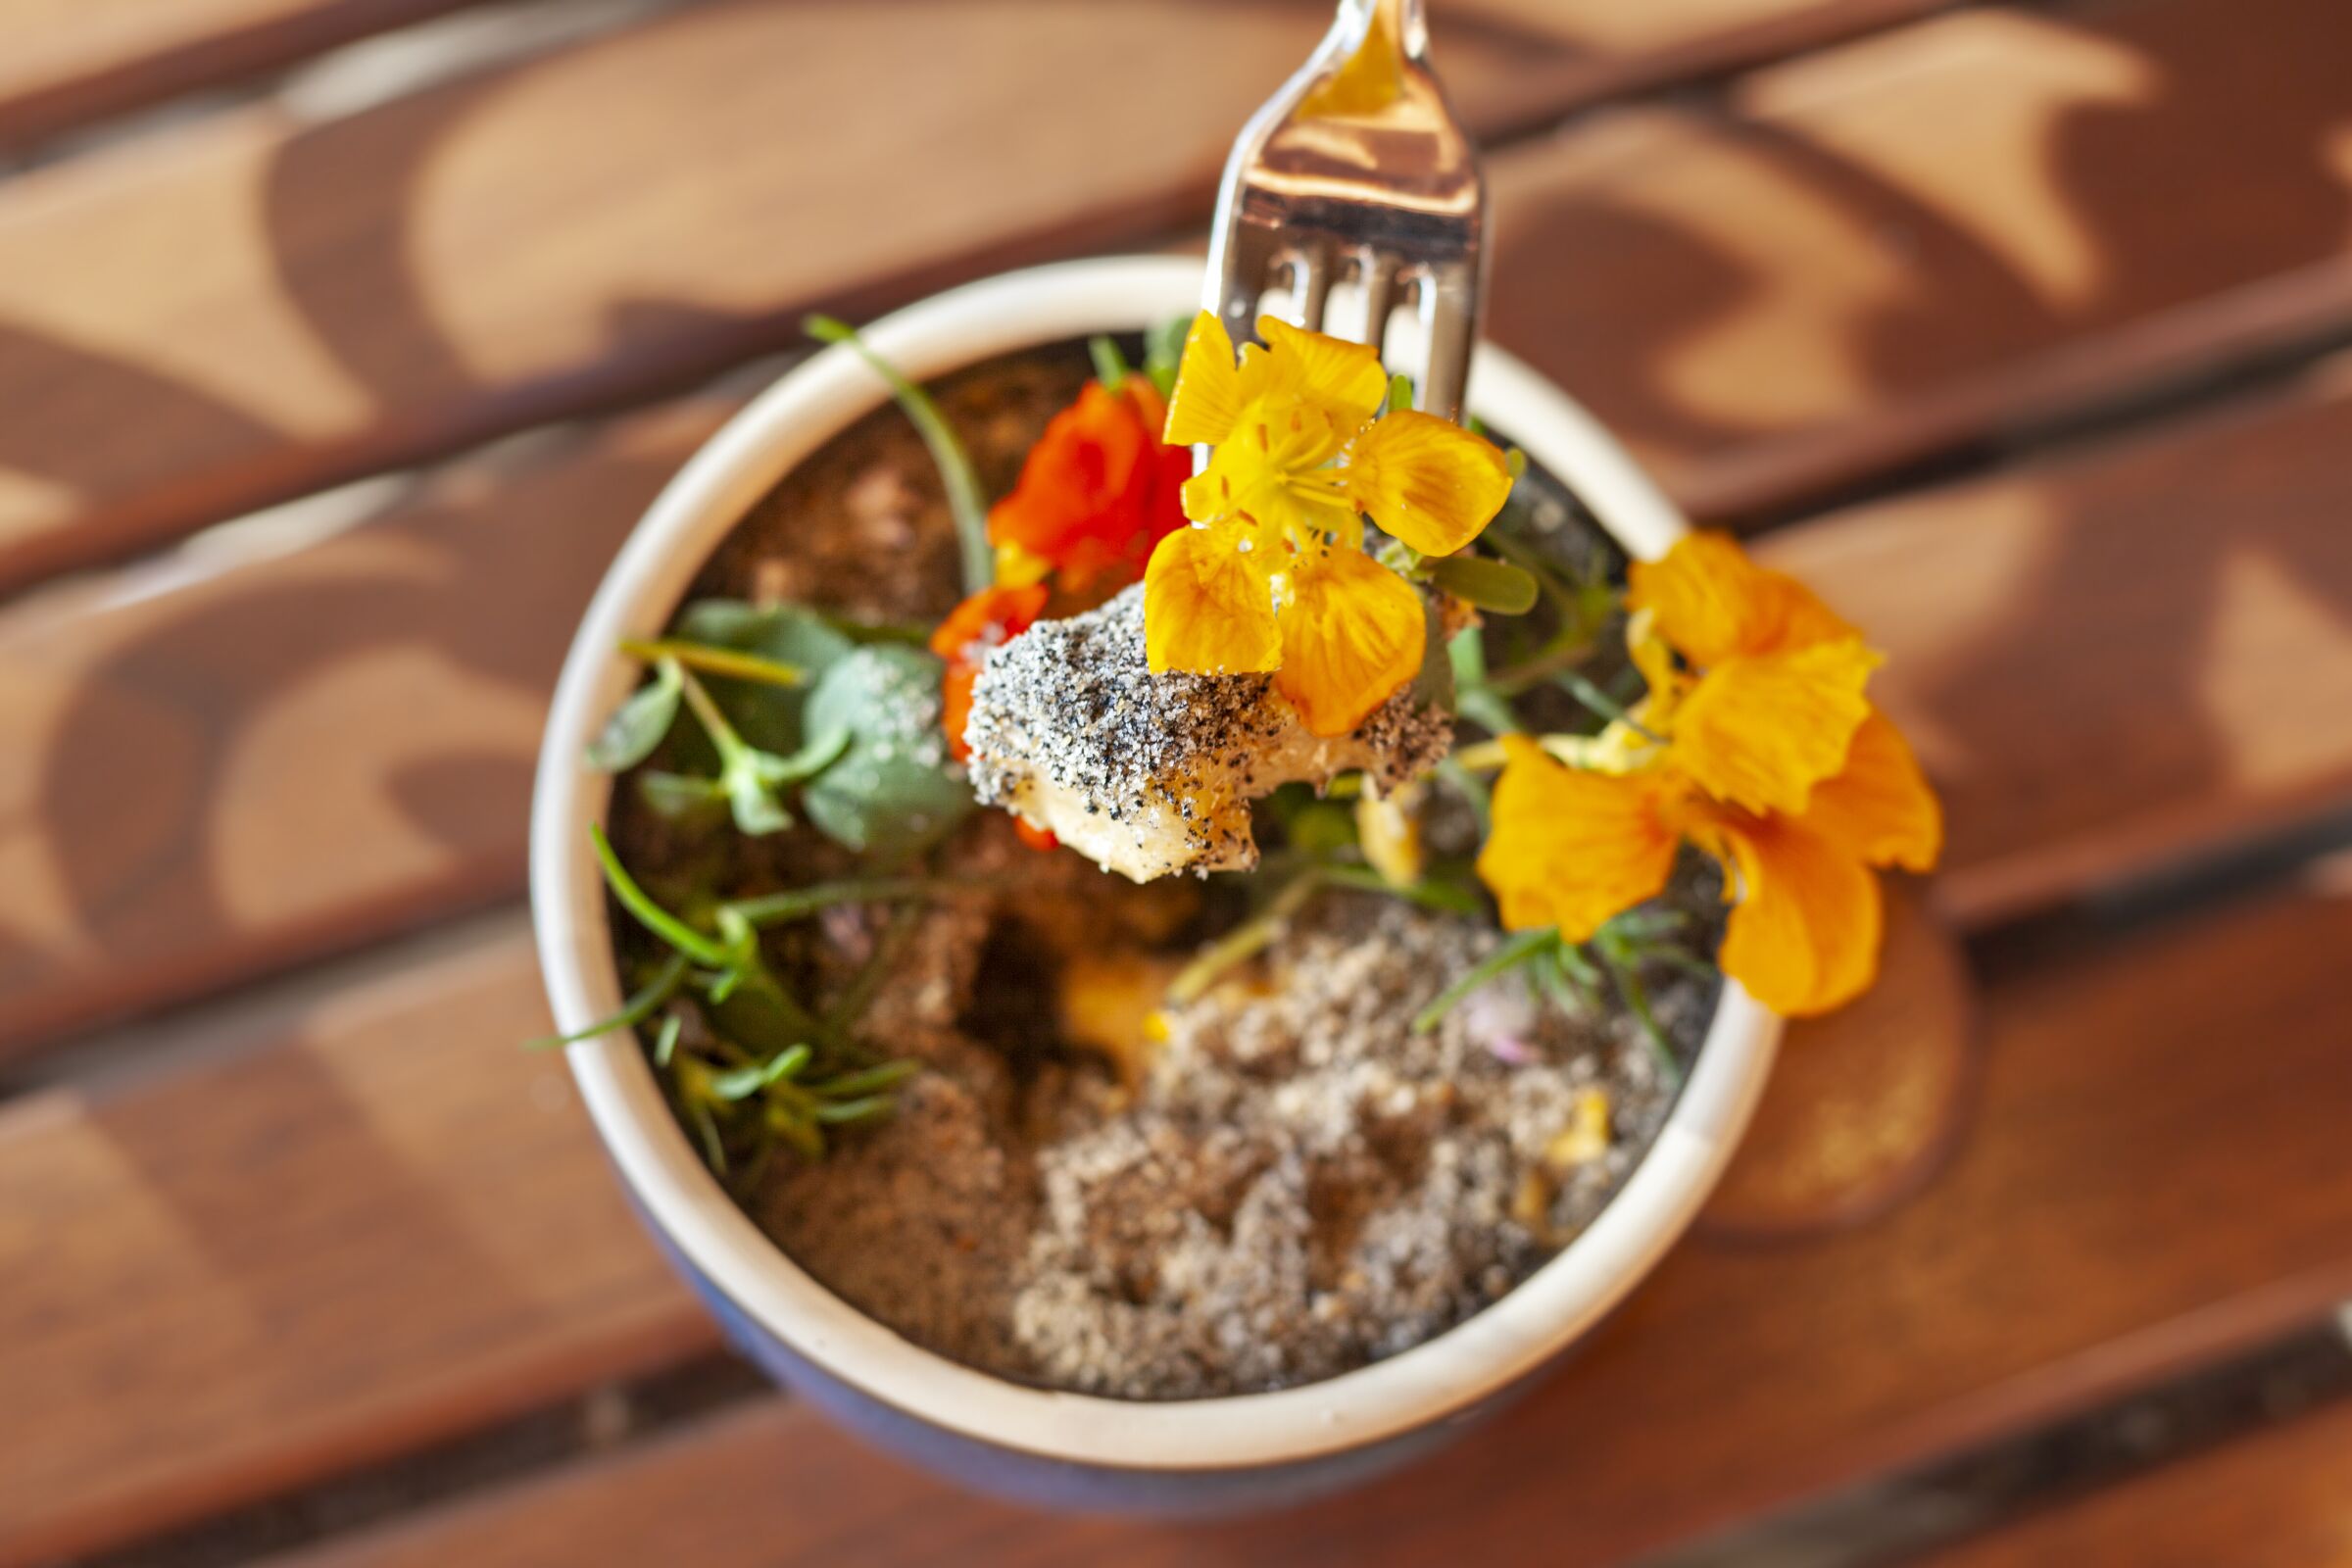 A decadent ricotta gnudi dish disguised as an edible flower pot at Avant restaurant in Rancho Bernardo.